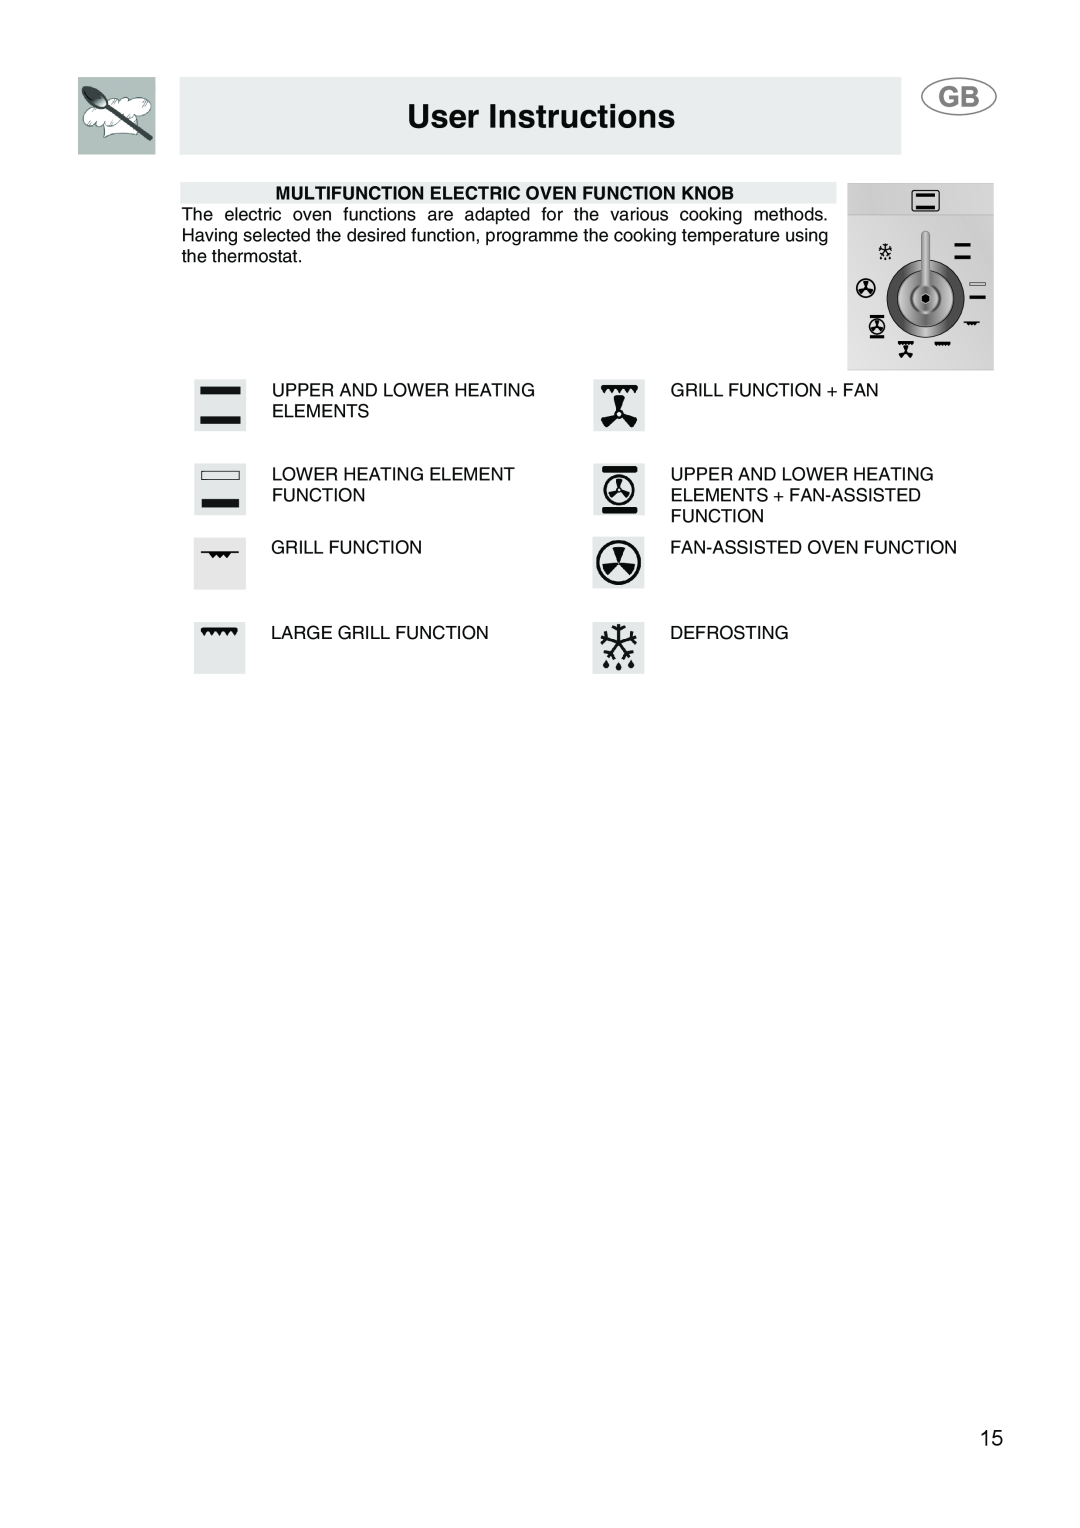 Smeg SA9058X manual User Instructions, Multifunction Electric Oven Function Knob 